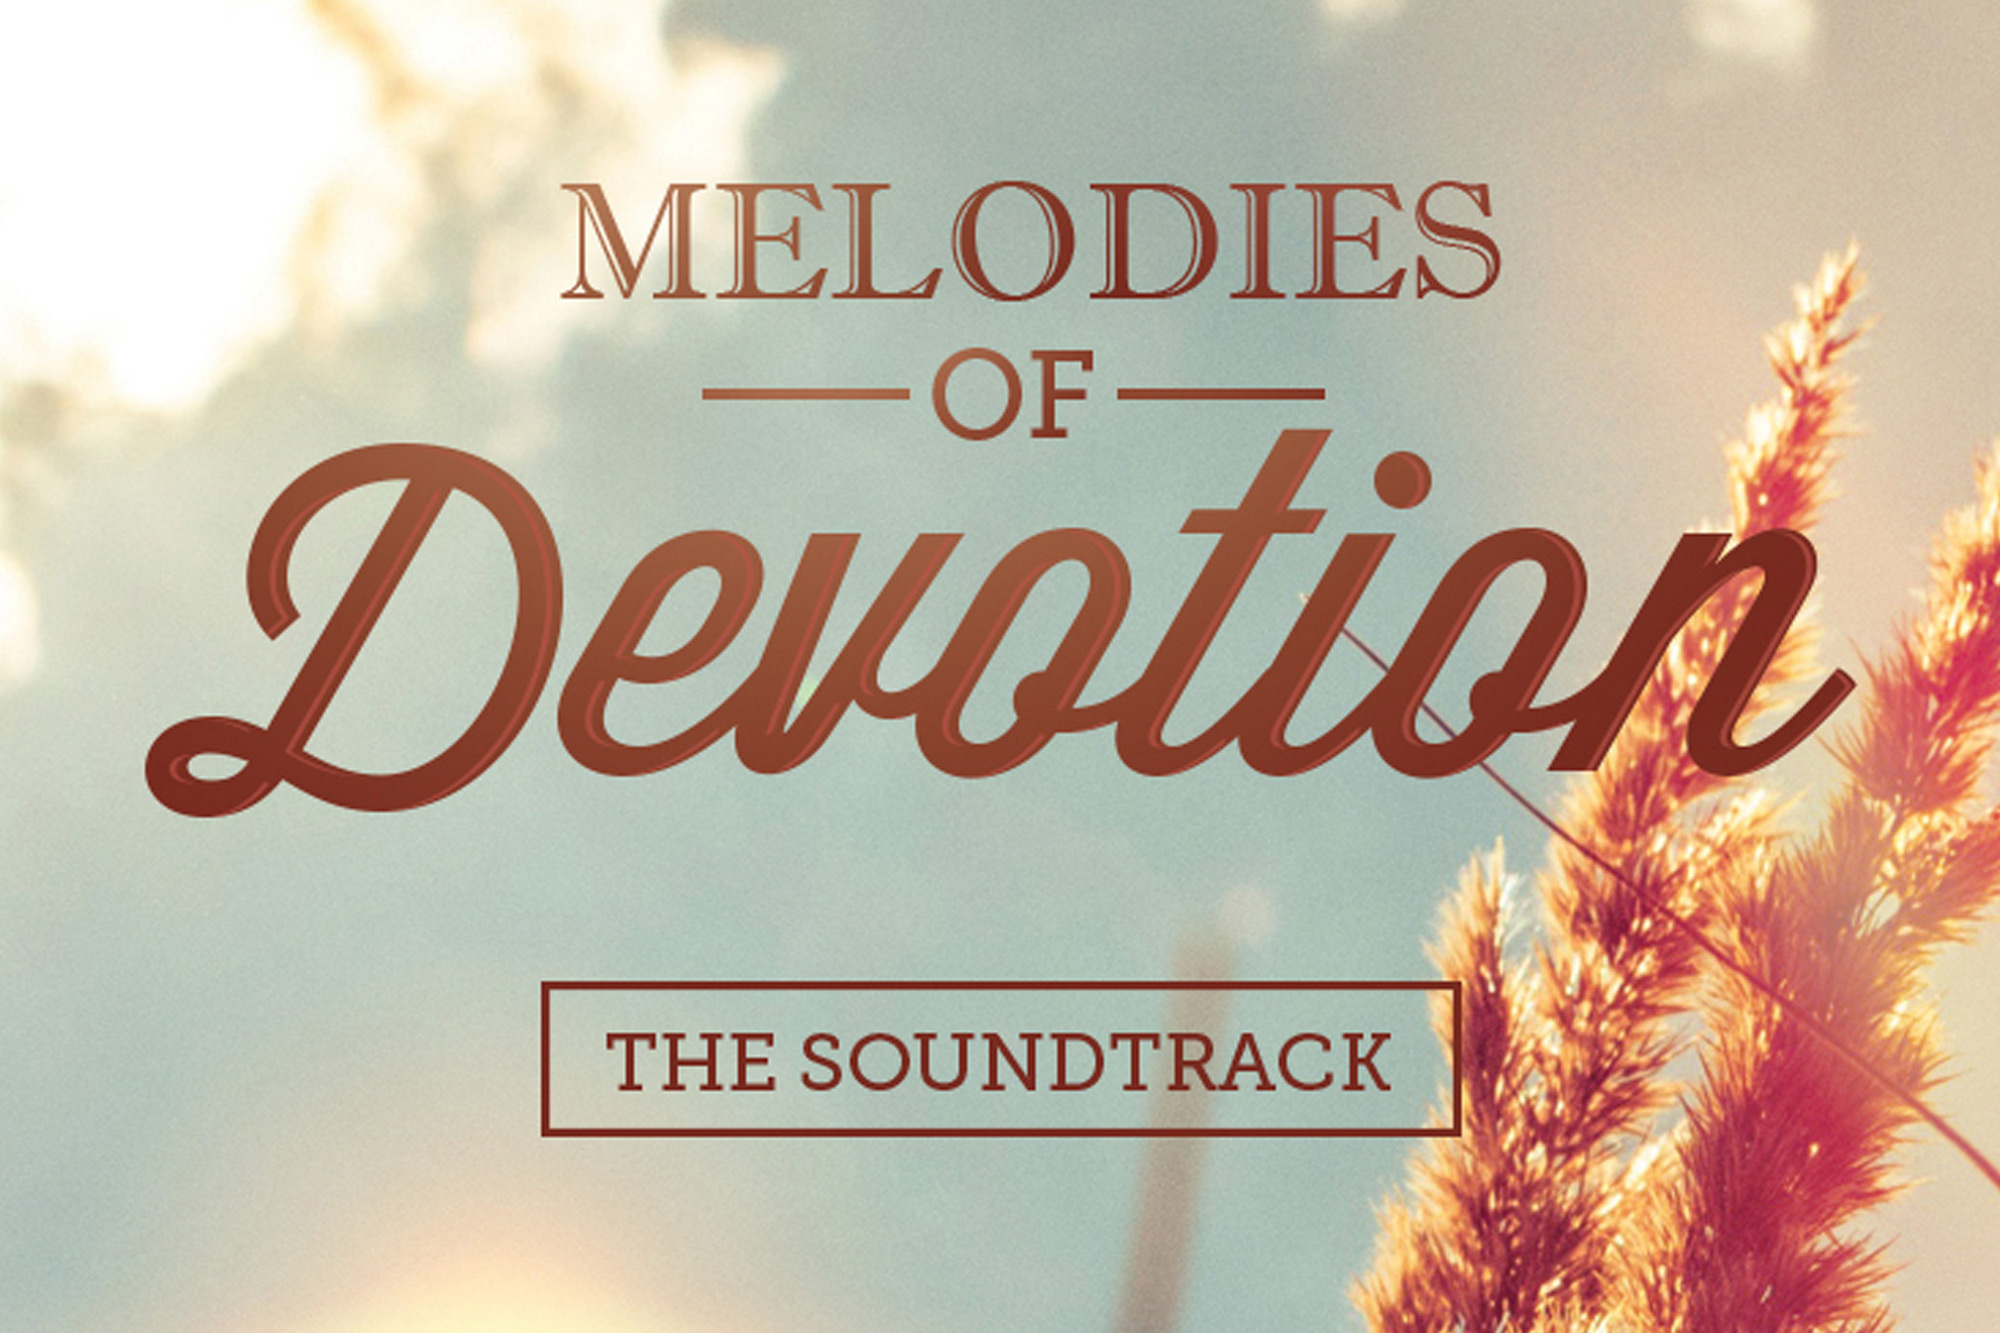 Melodies of Devotion Soundtrack